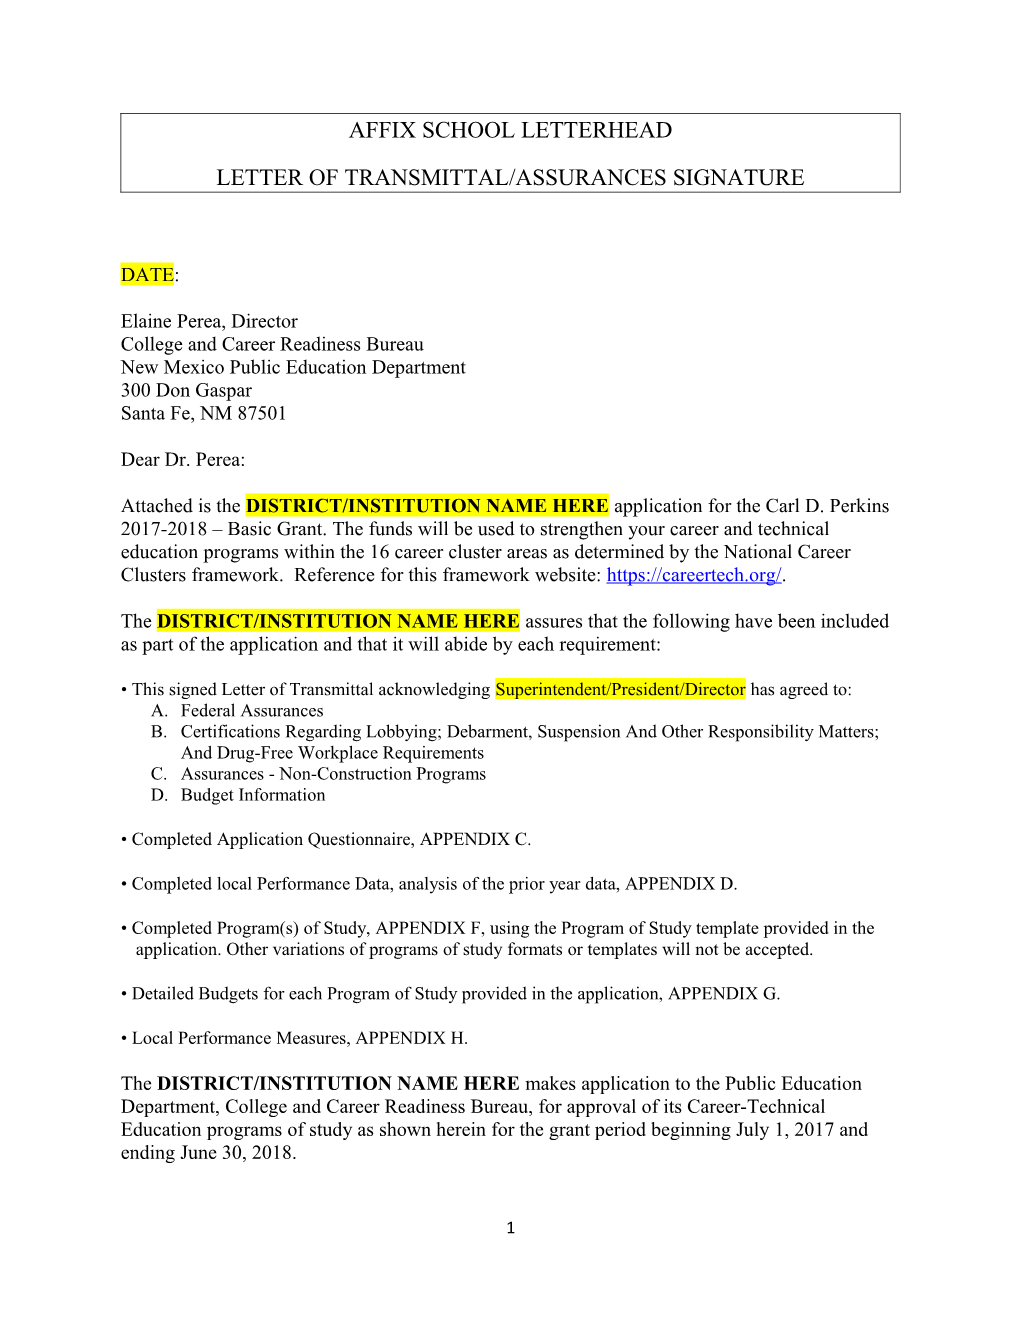 Letter of Transmittal/Assurances Signature